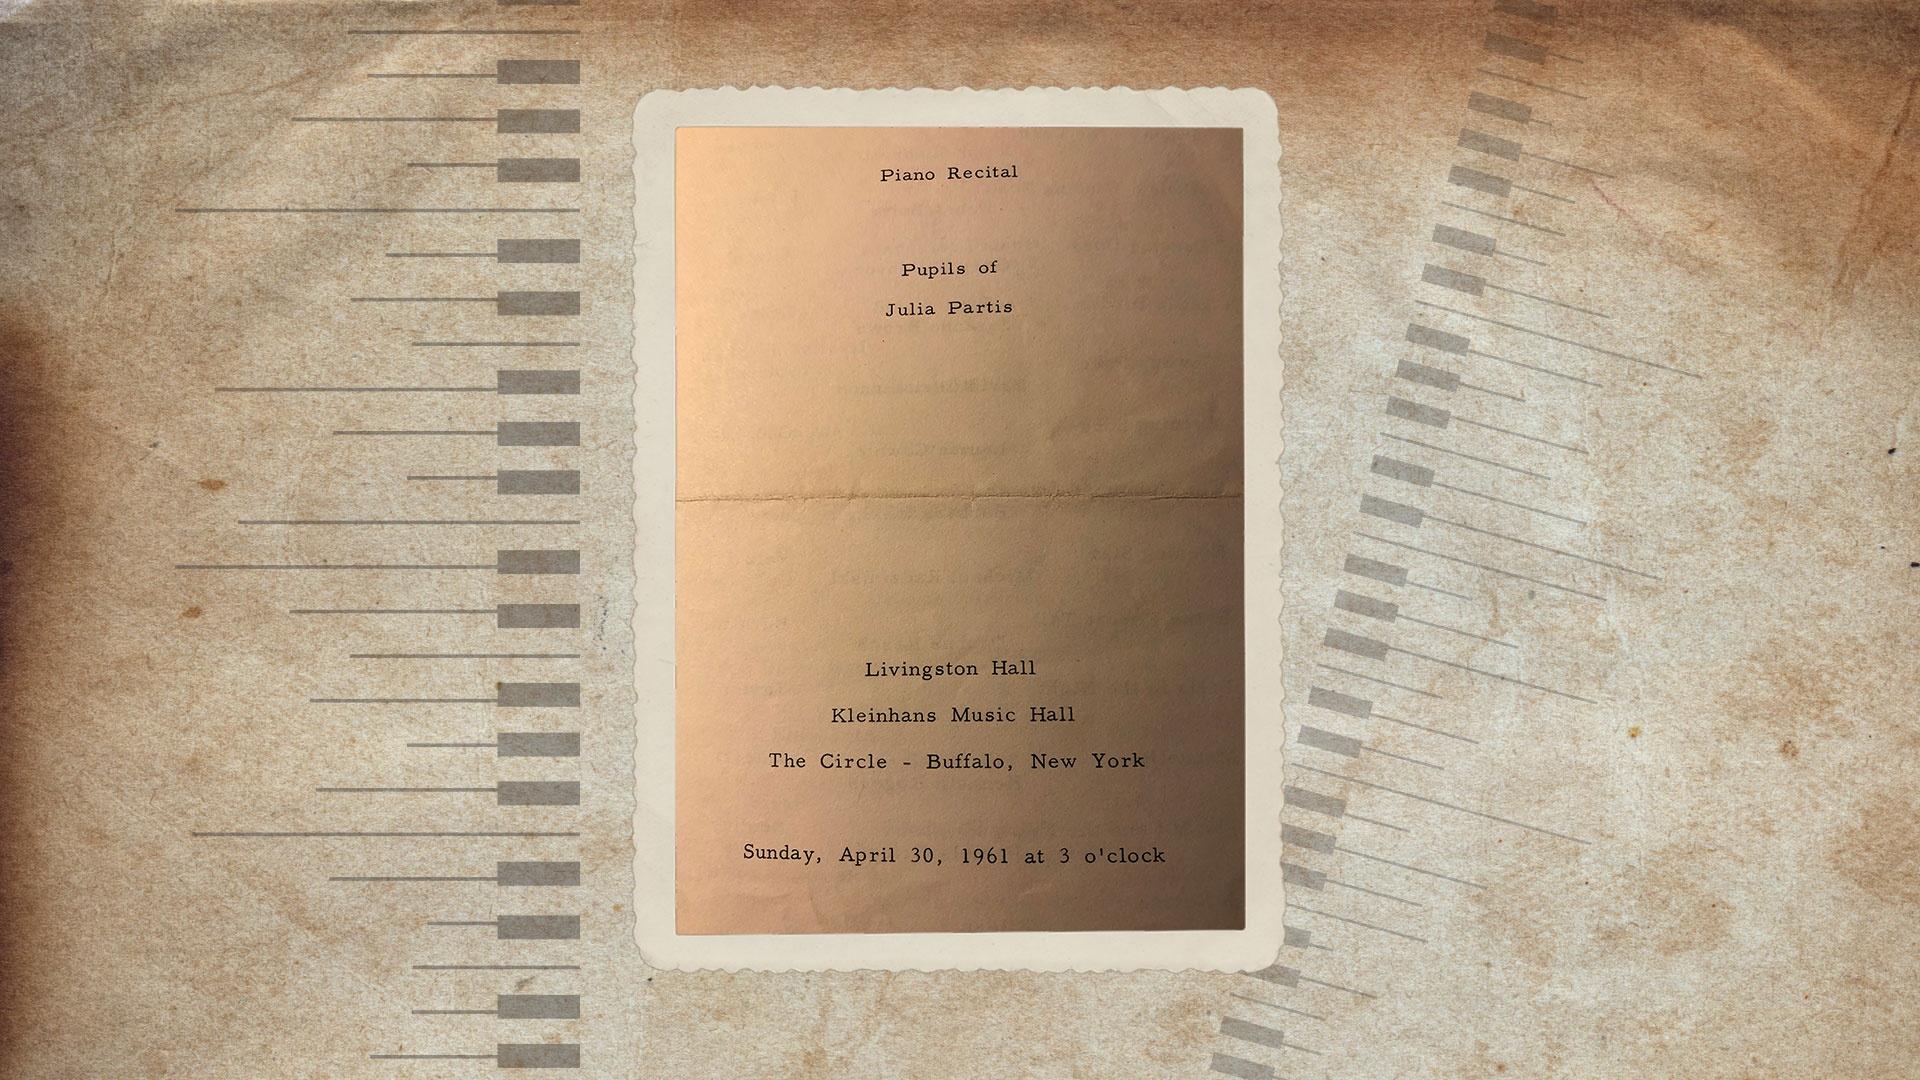 1961 program from a piano recital at Kleinhans Music Hall